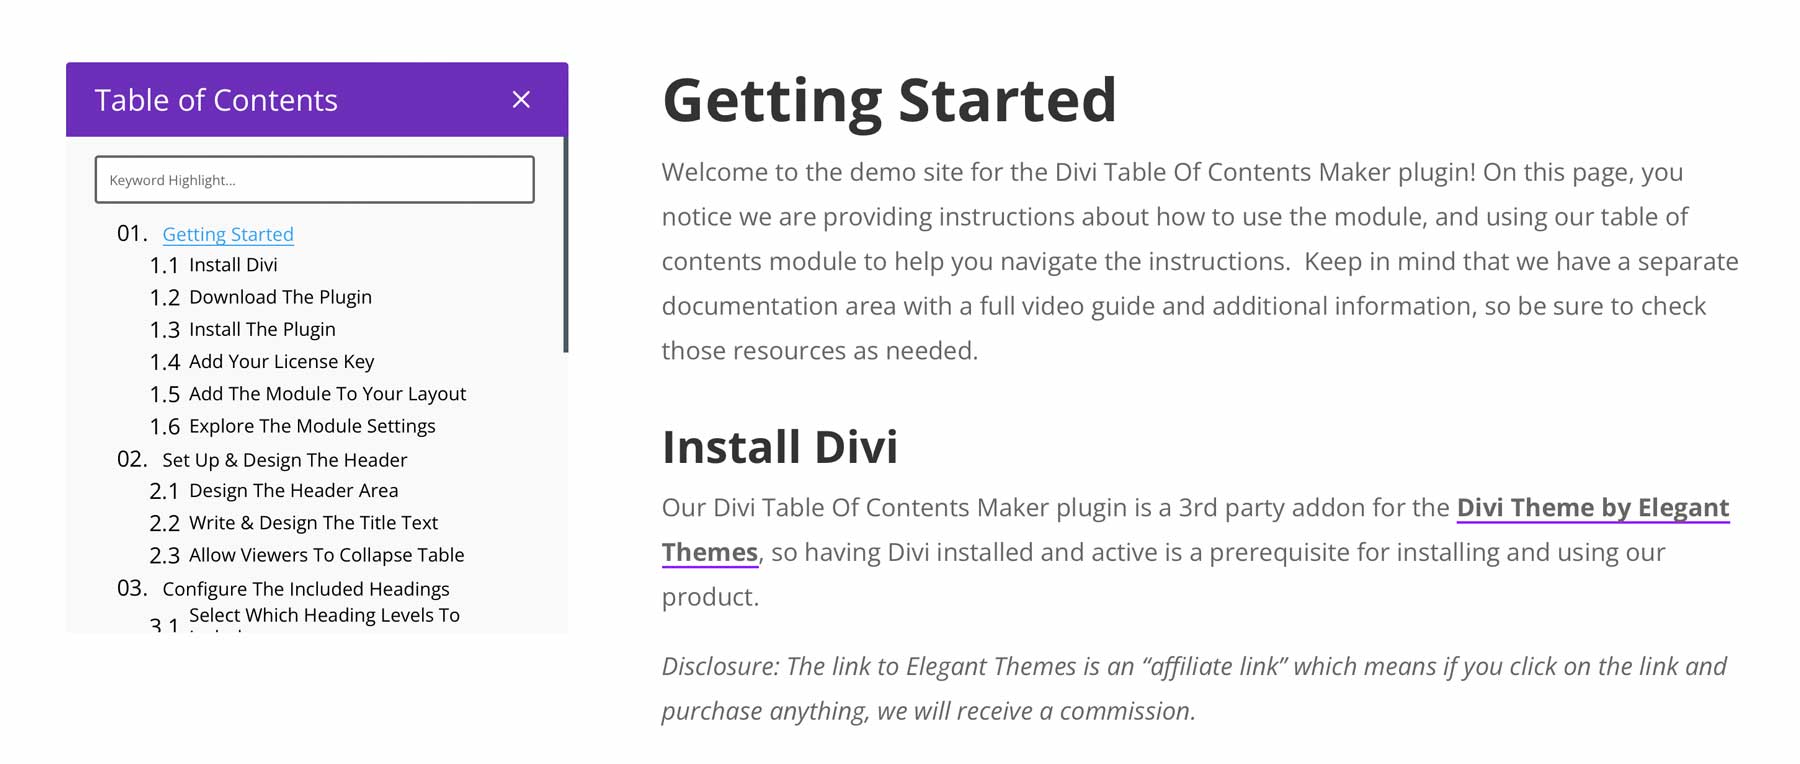 Divi table of contents maker demo